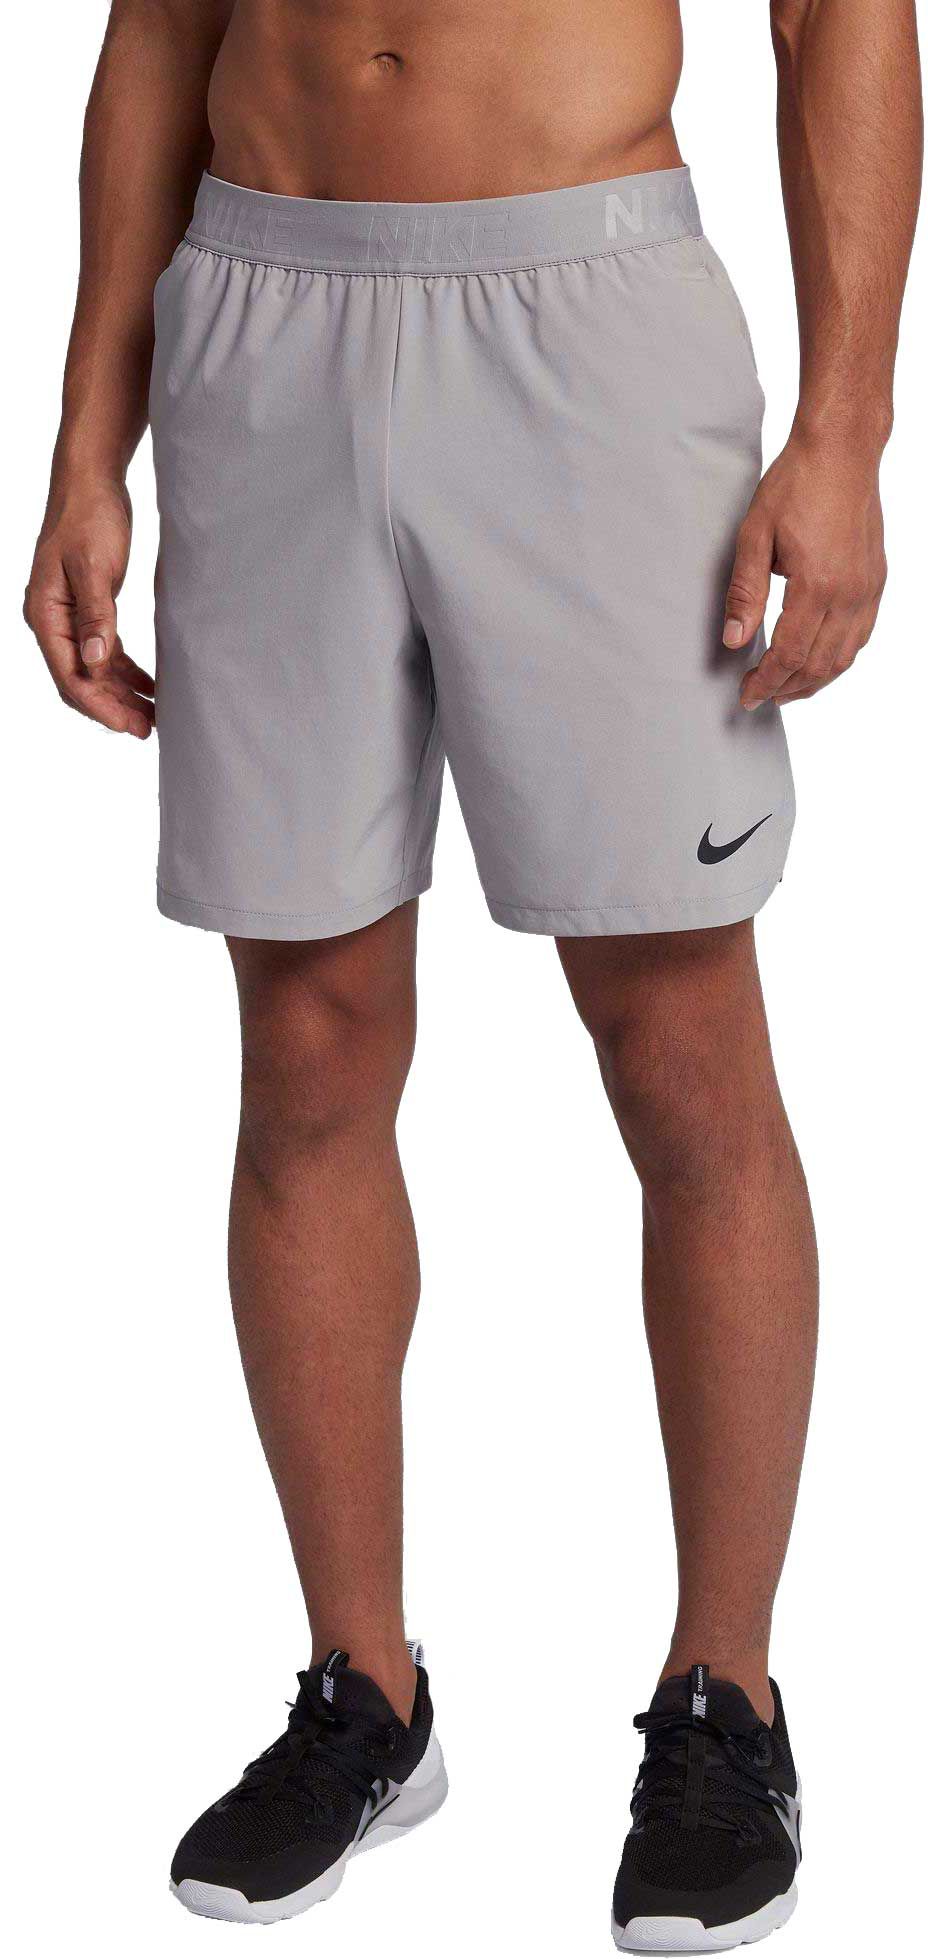 8 inch nike shorts